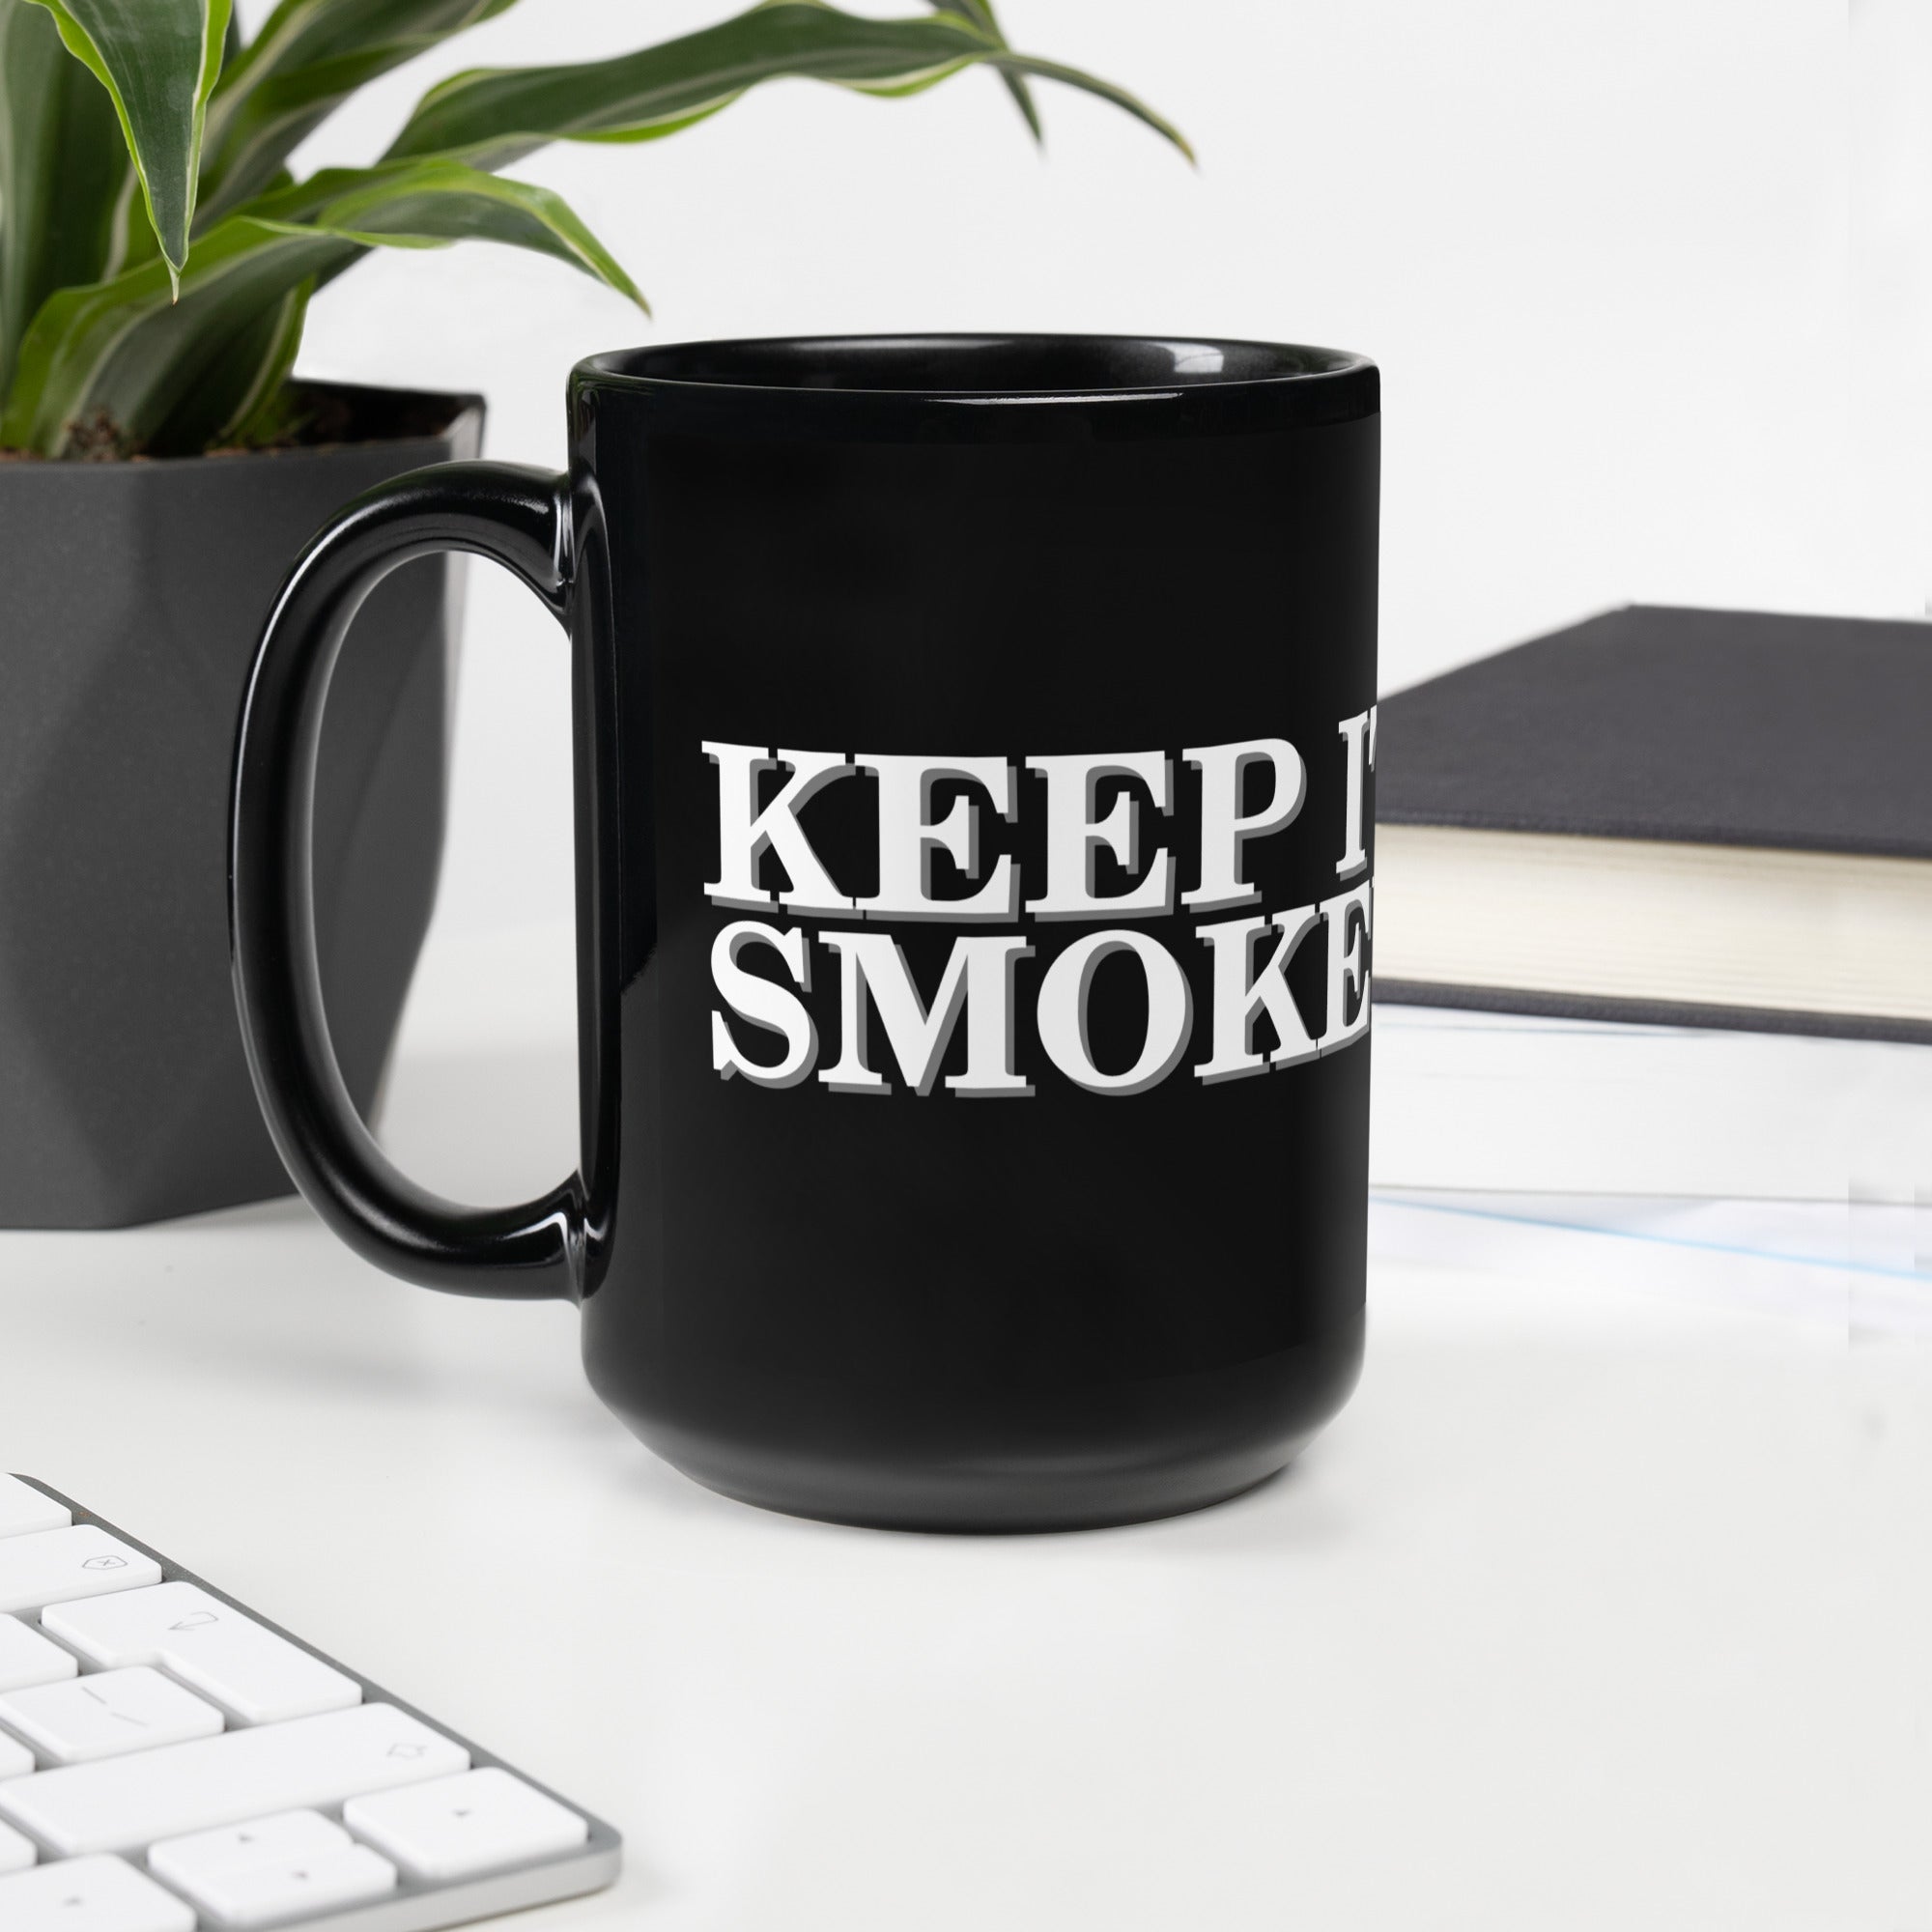 Keep it Smokey- Black Glossy Mug